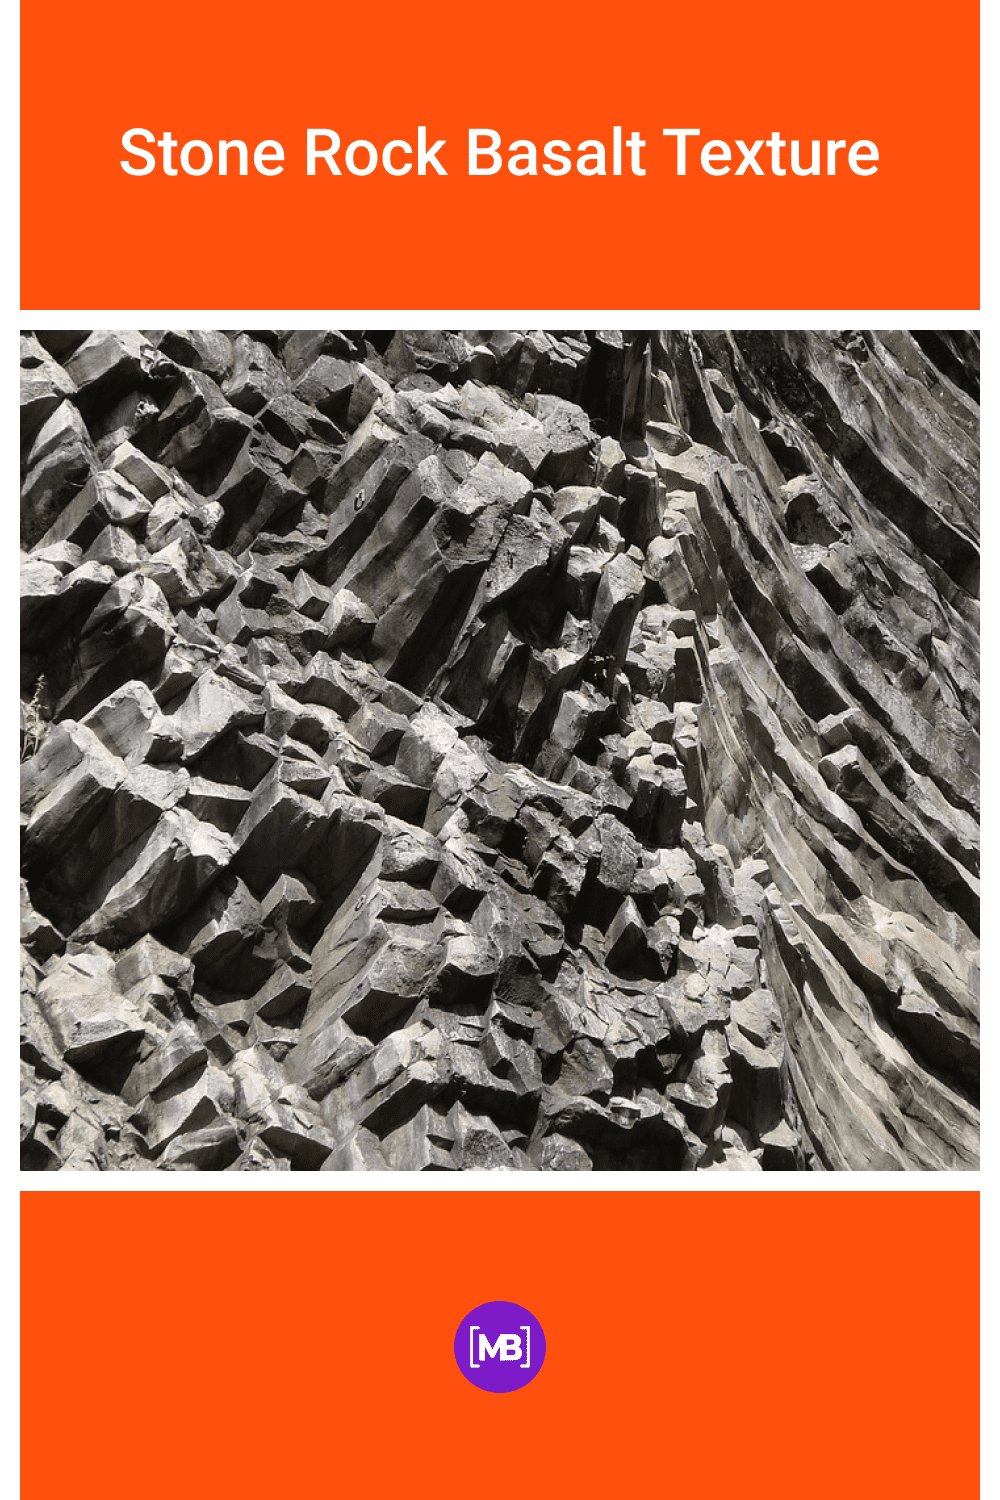 Stone rock basalt texture.